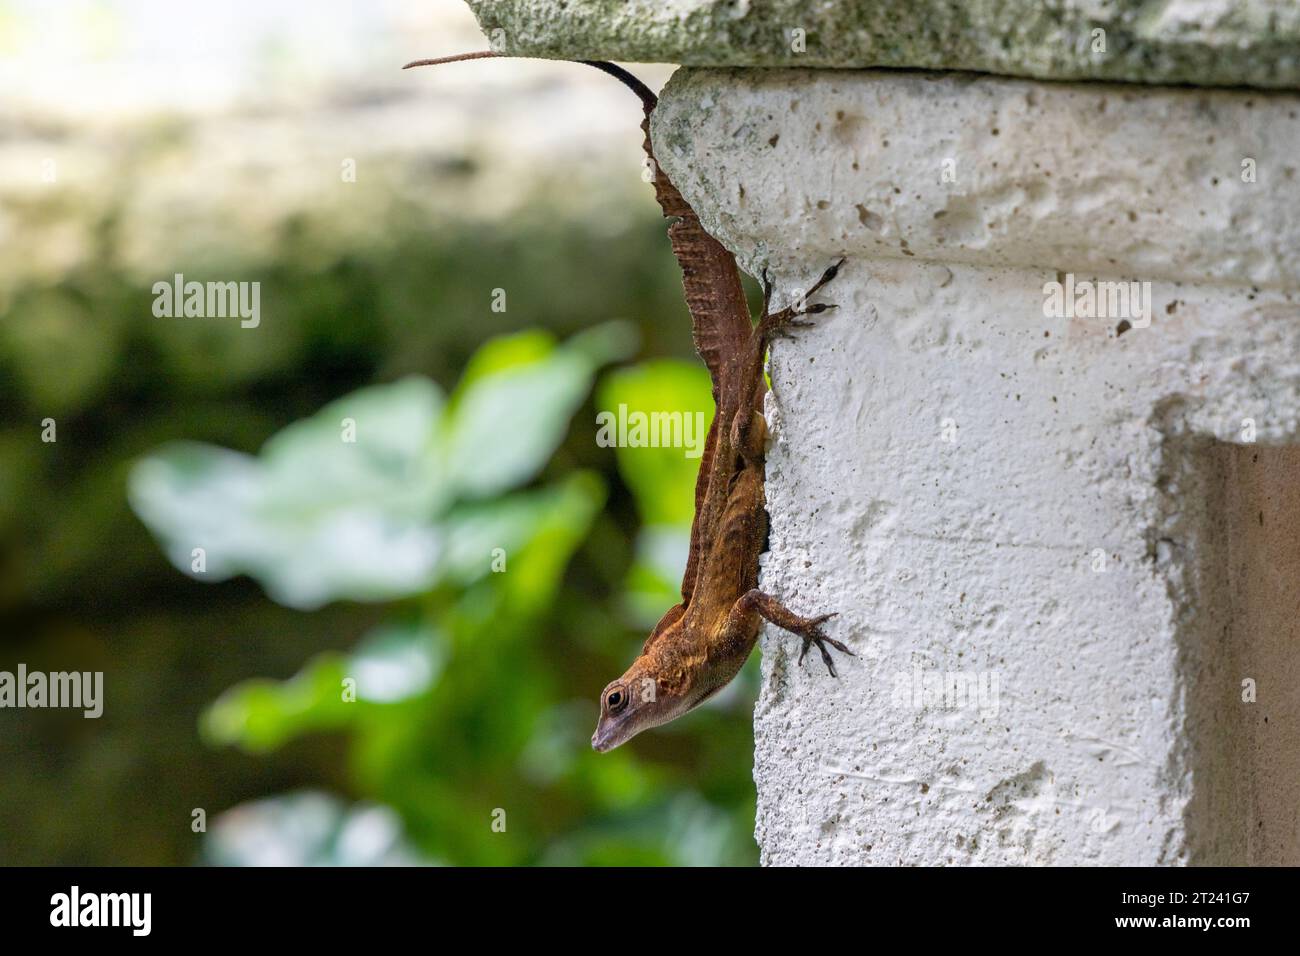 Coast horned lizard, Phrynosoma coronatum, climbing a brick wall outdoor. Stock Photo